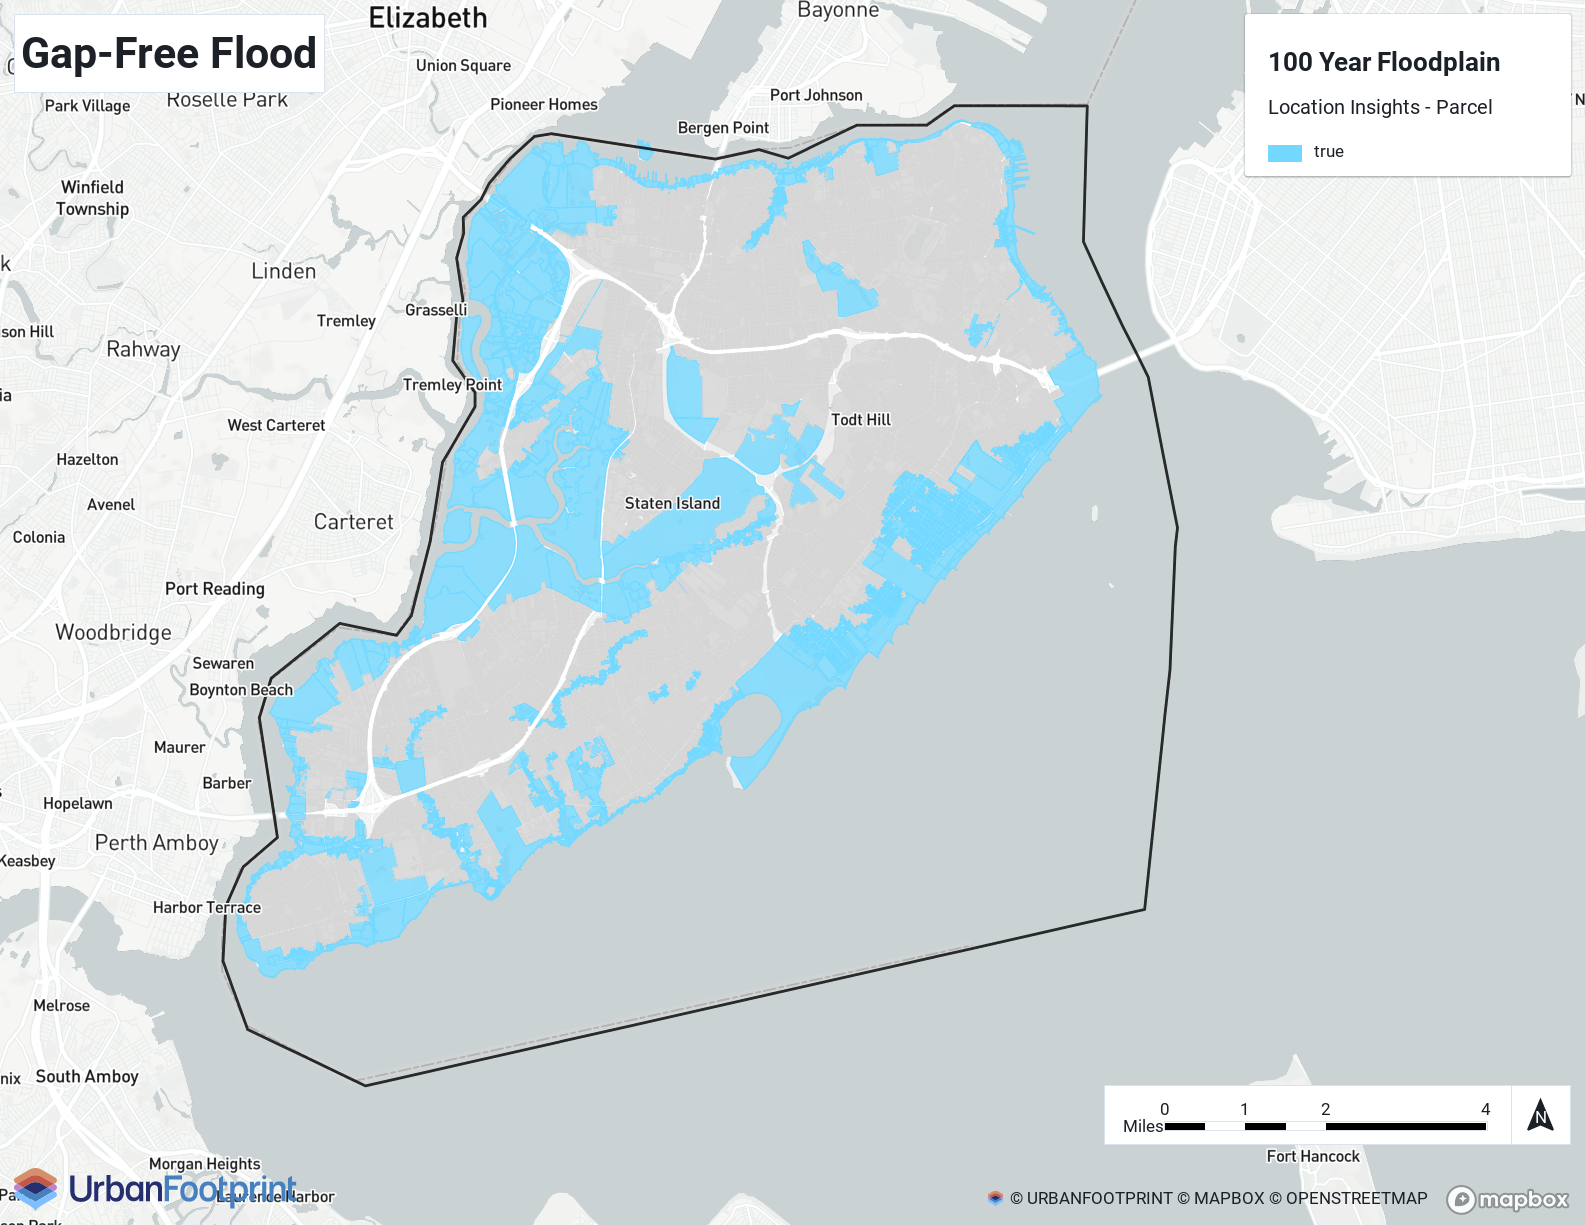 Analyst Example – Gap-Free Flood